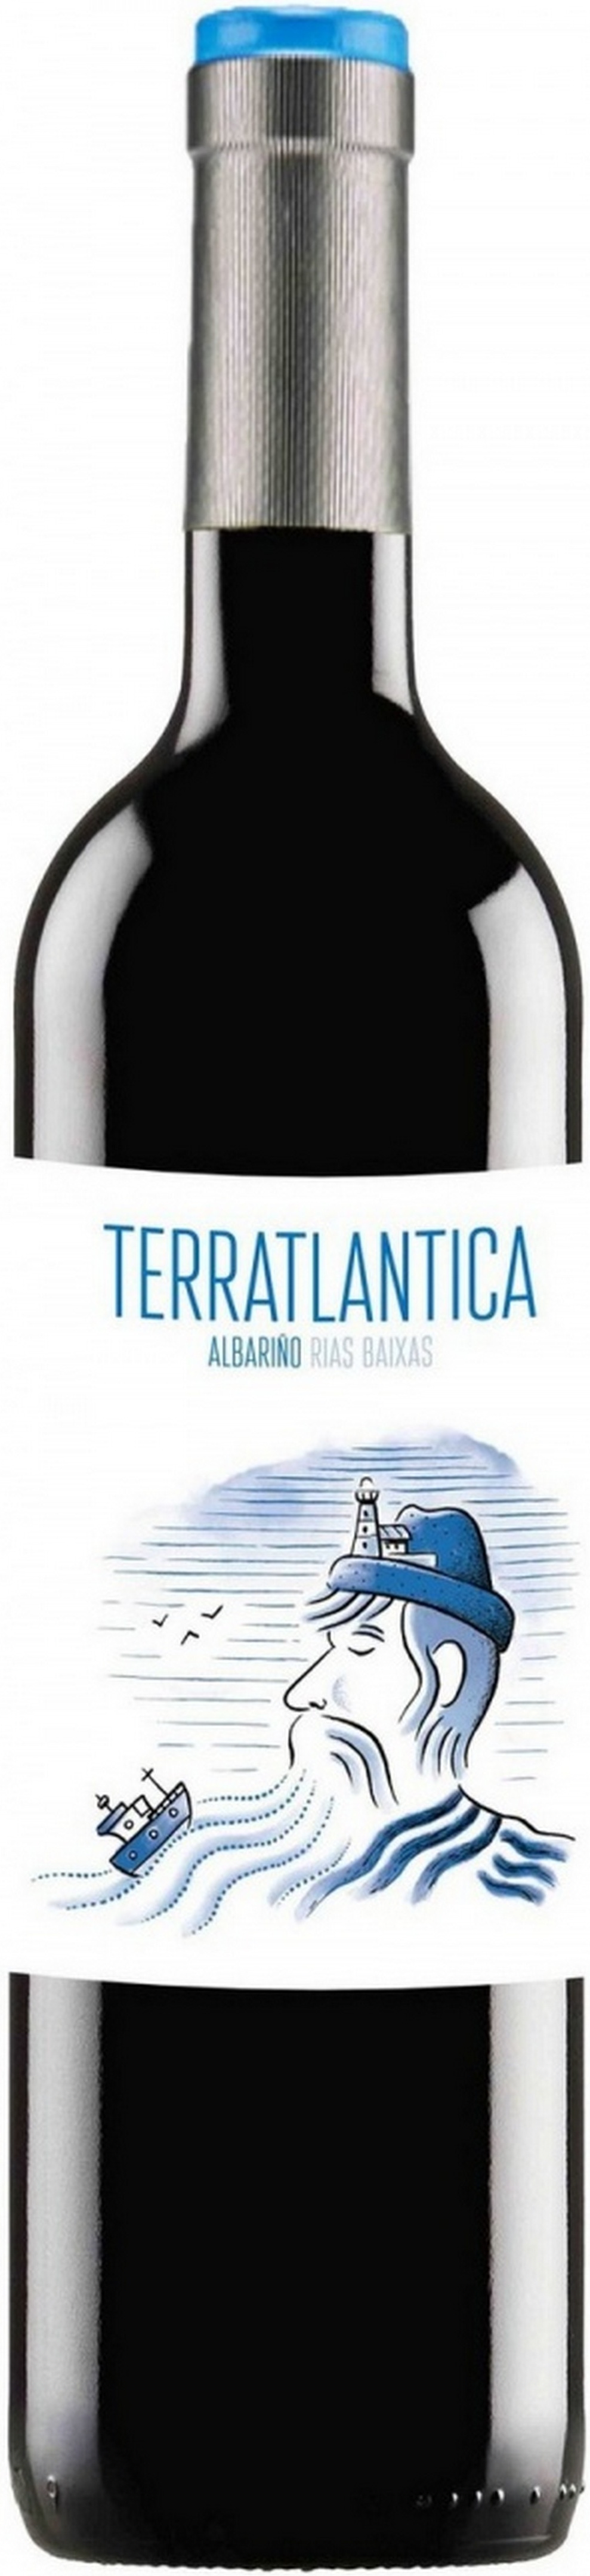 terratlantica-2019